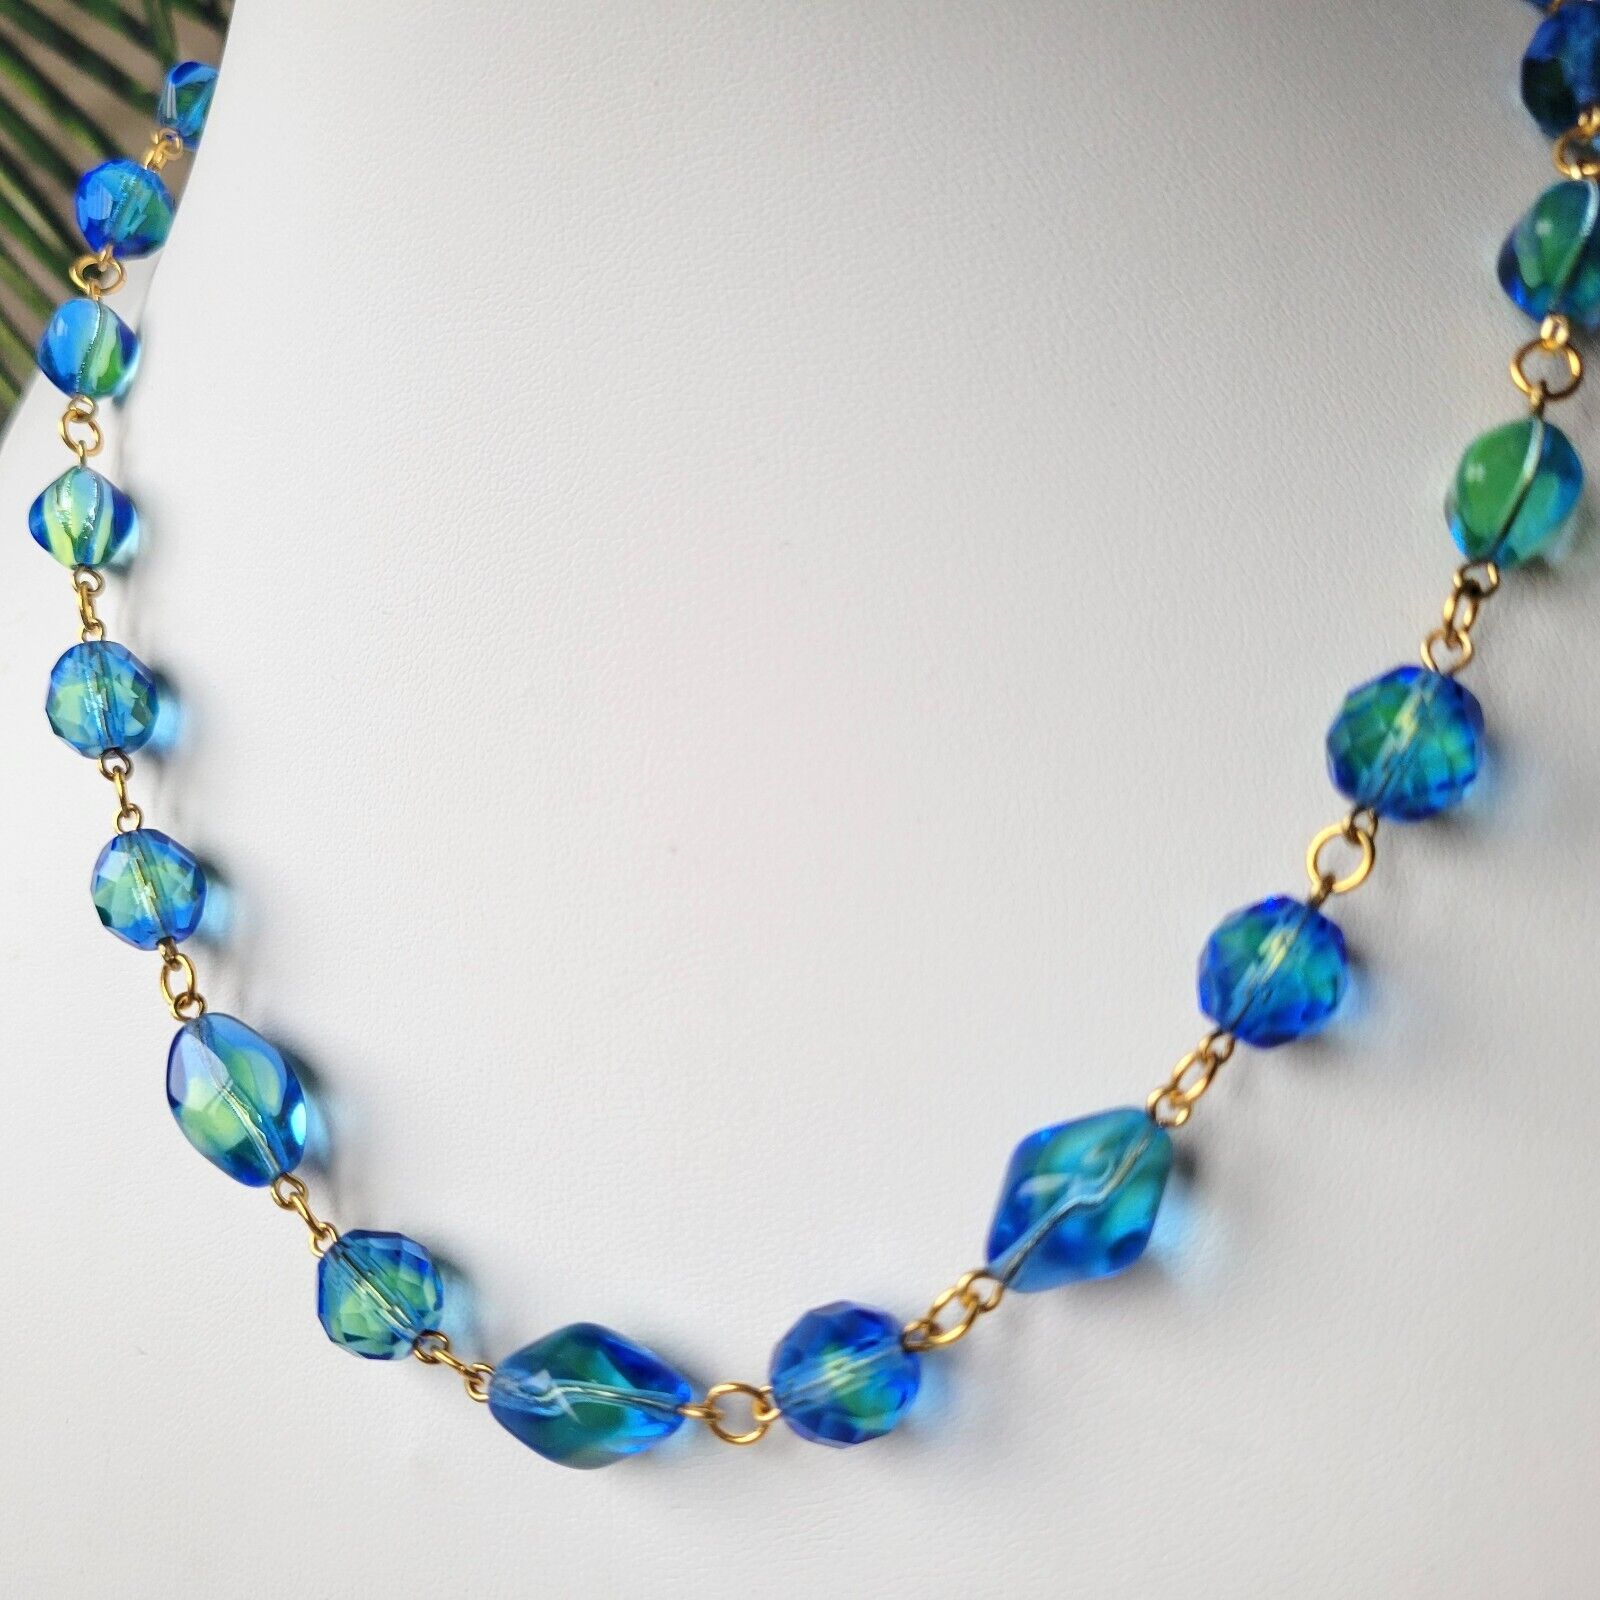 Vaseline Glass Necklace 18'' Uranium Blue Czech Glass Vintage Jewelry Art Deco